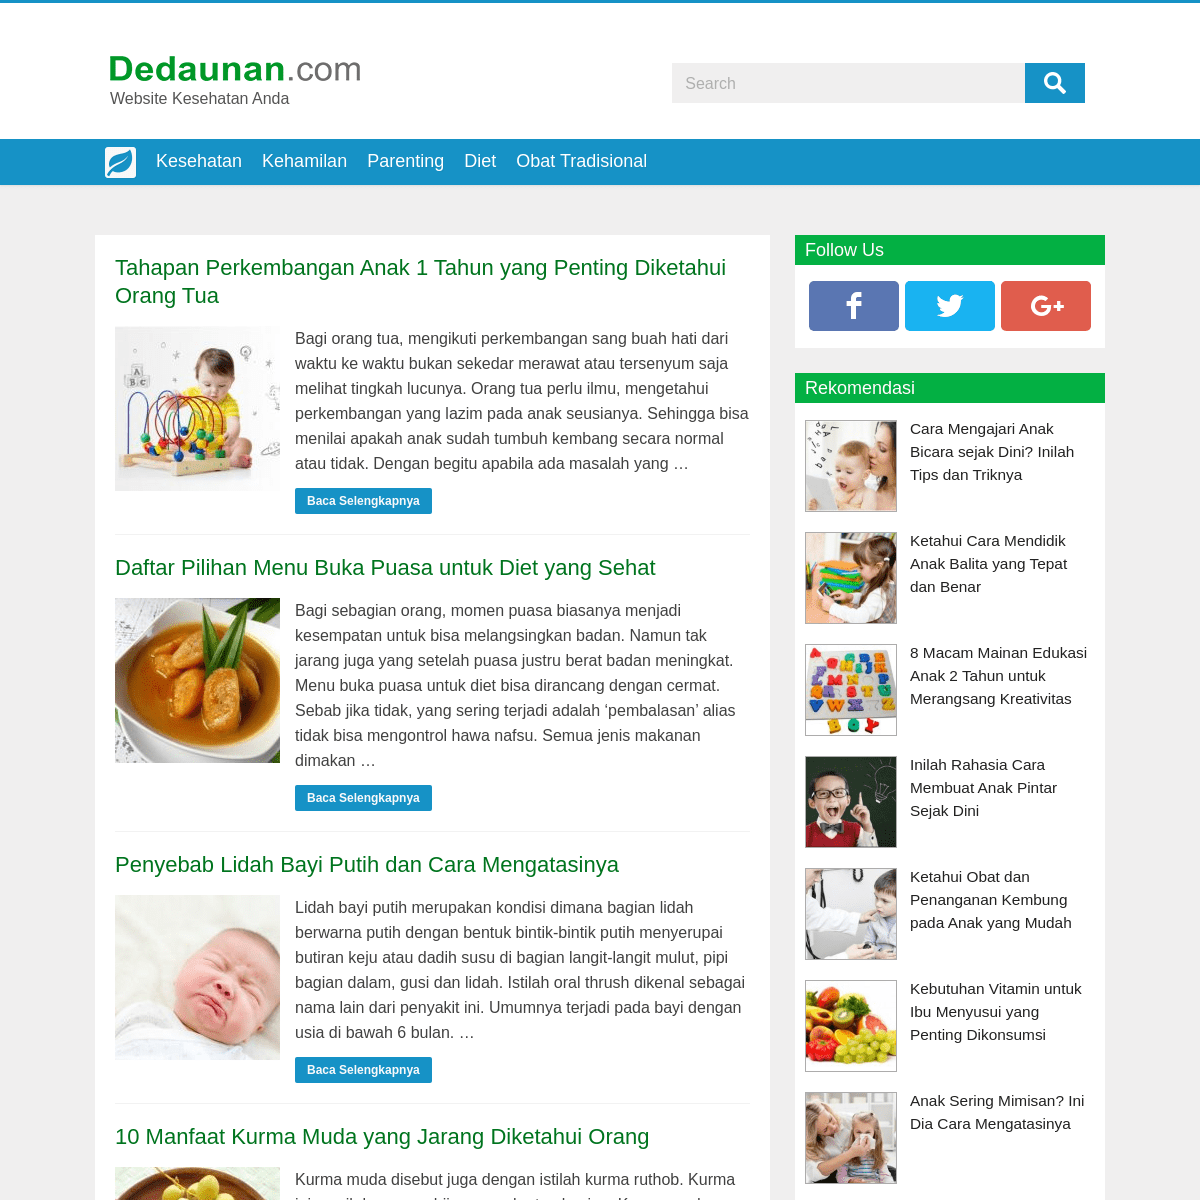 A complete backup of dedaunan.com